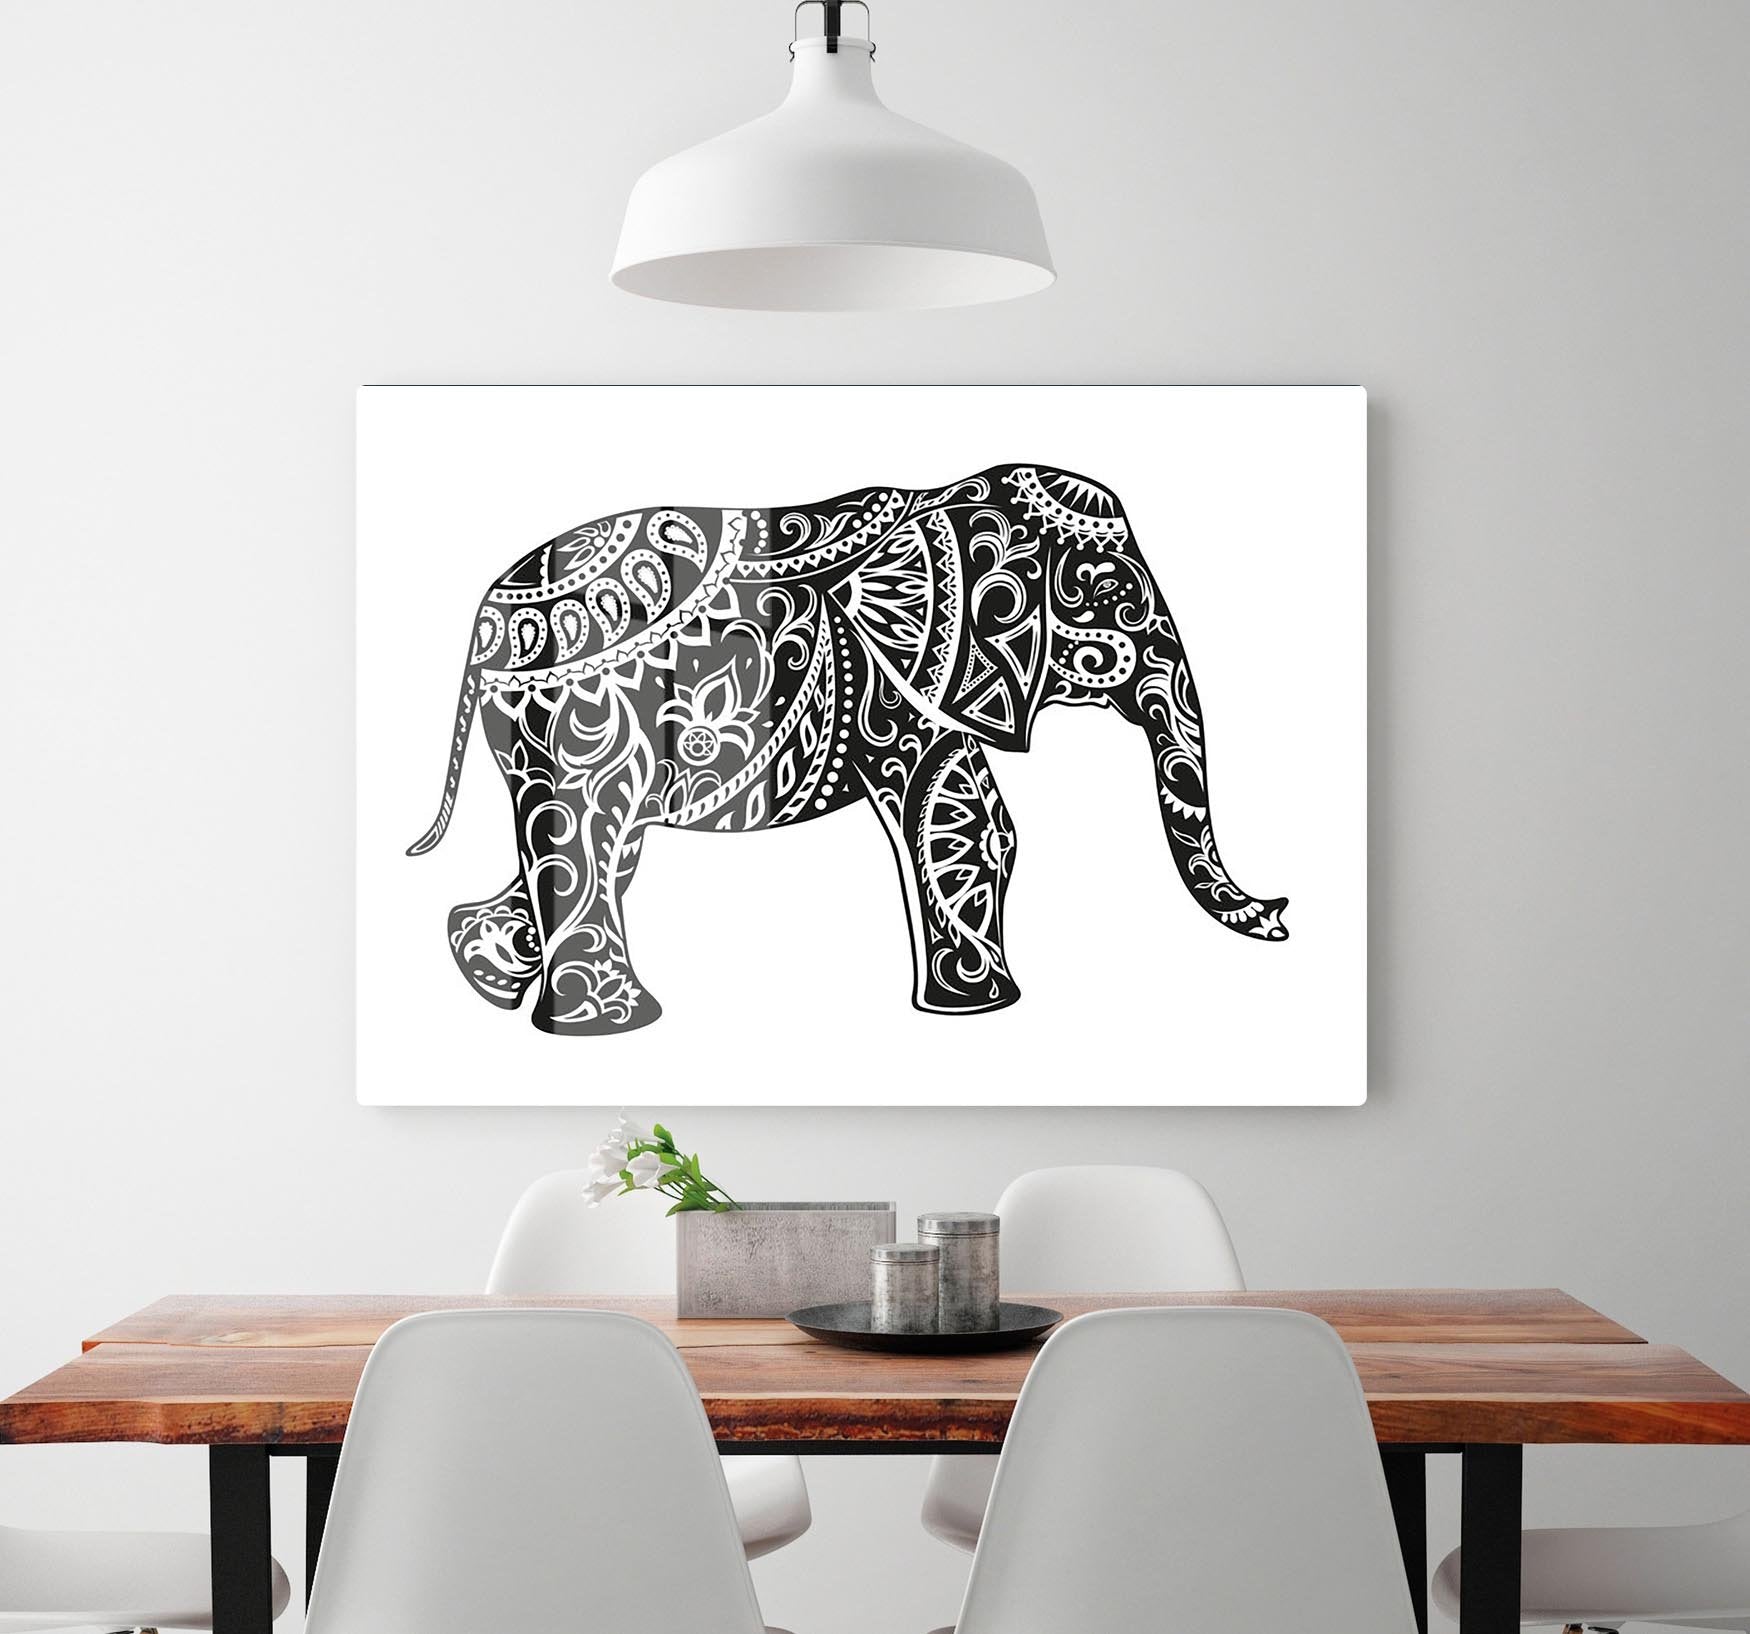 The stylized figure of an elephant in the festive patterns HD Metal Print - Canvas Art Rocks - 2